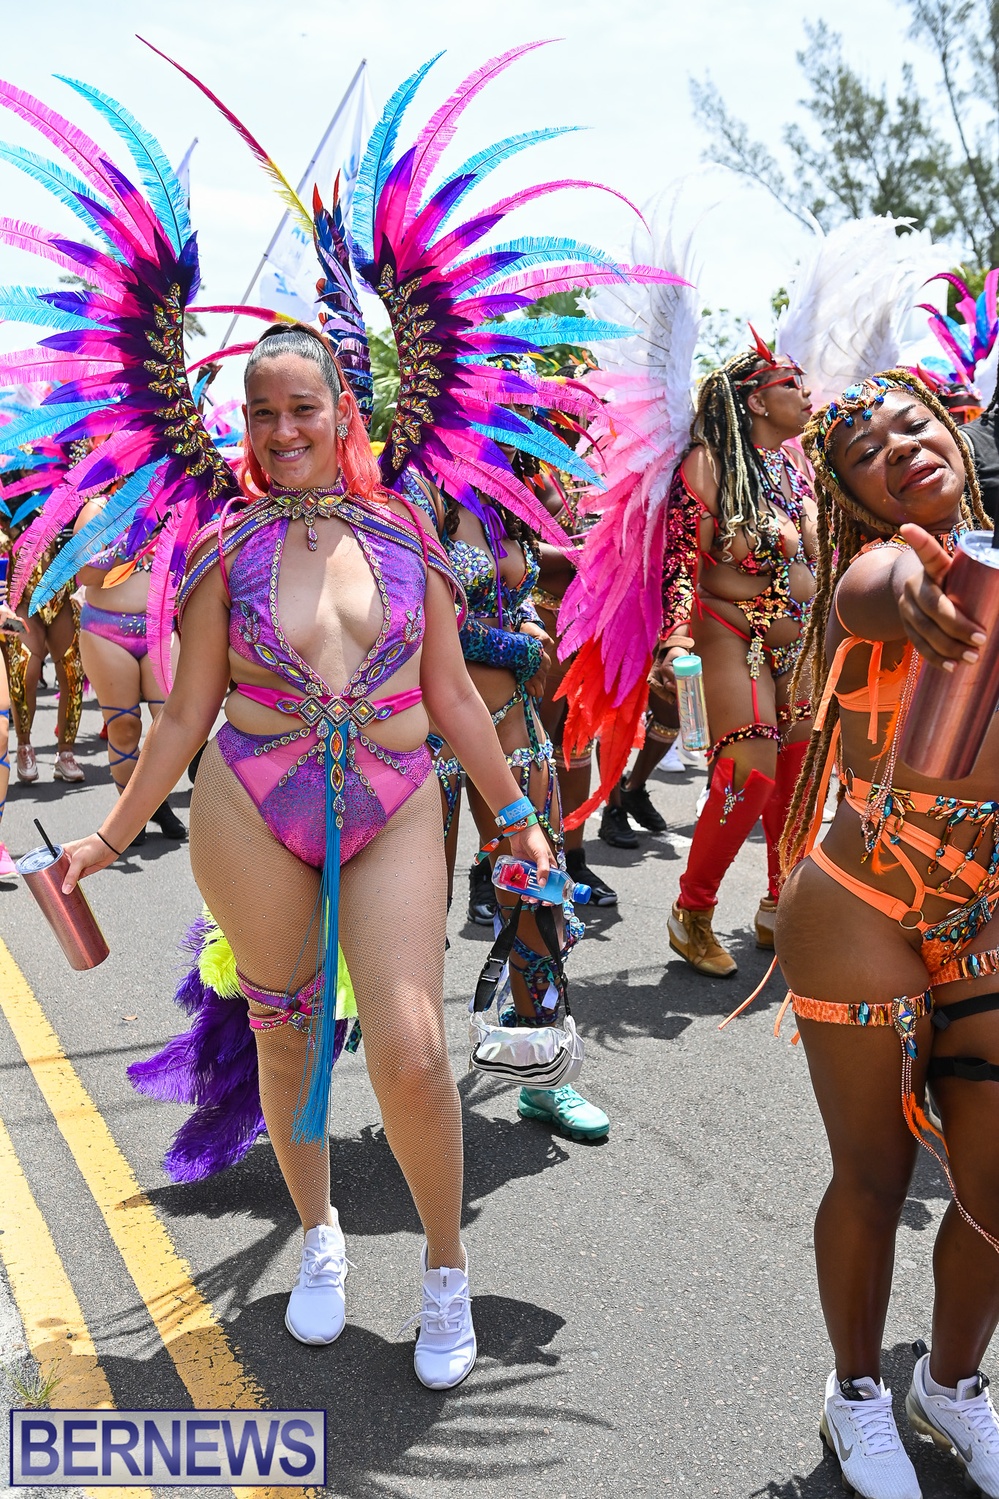 Carnival in Bermuda ‘Revel de Road’ event  party June 2022 AW (23)